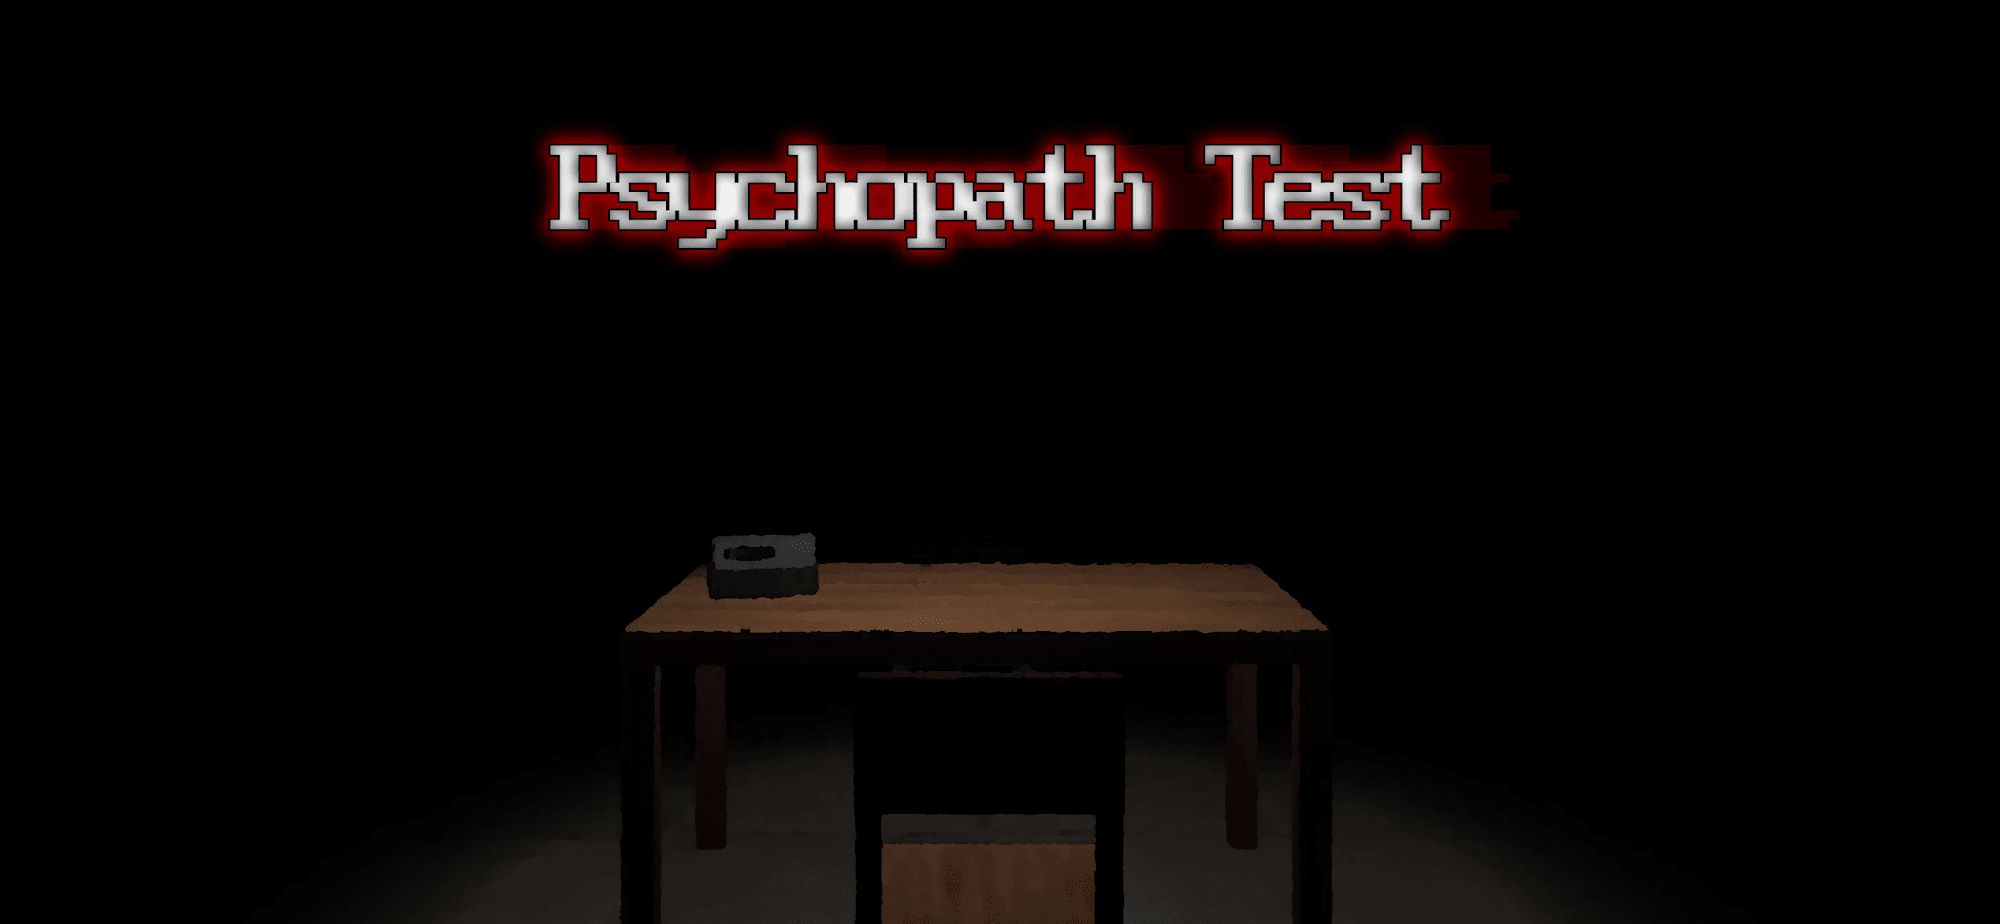 Baixar Psychopath Test para Android grátis.